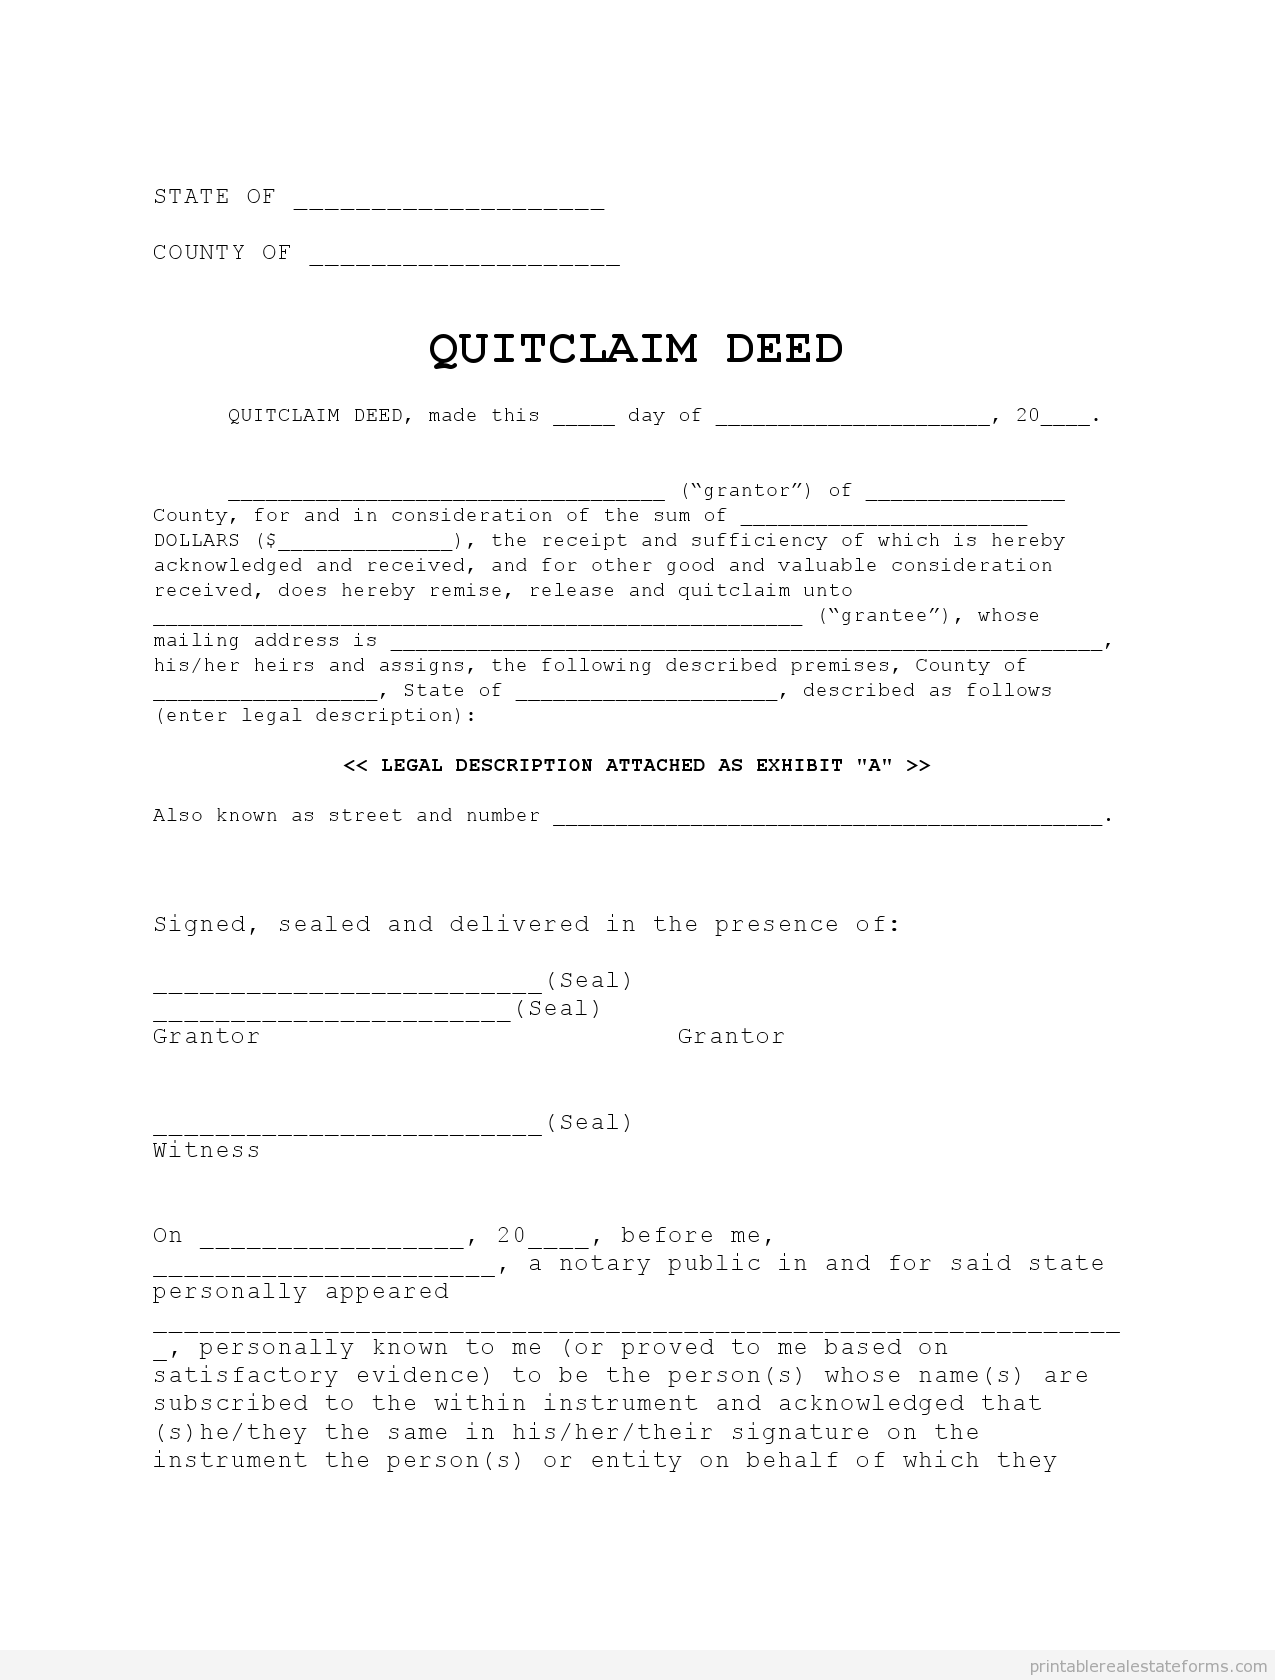 free-printable-blank-quitclaim-deed-example-form-pdf